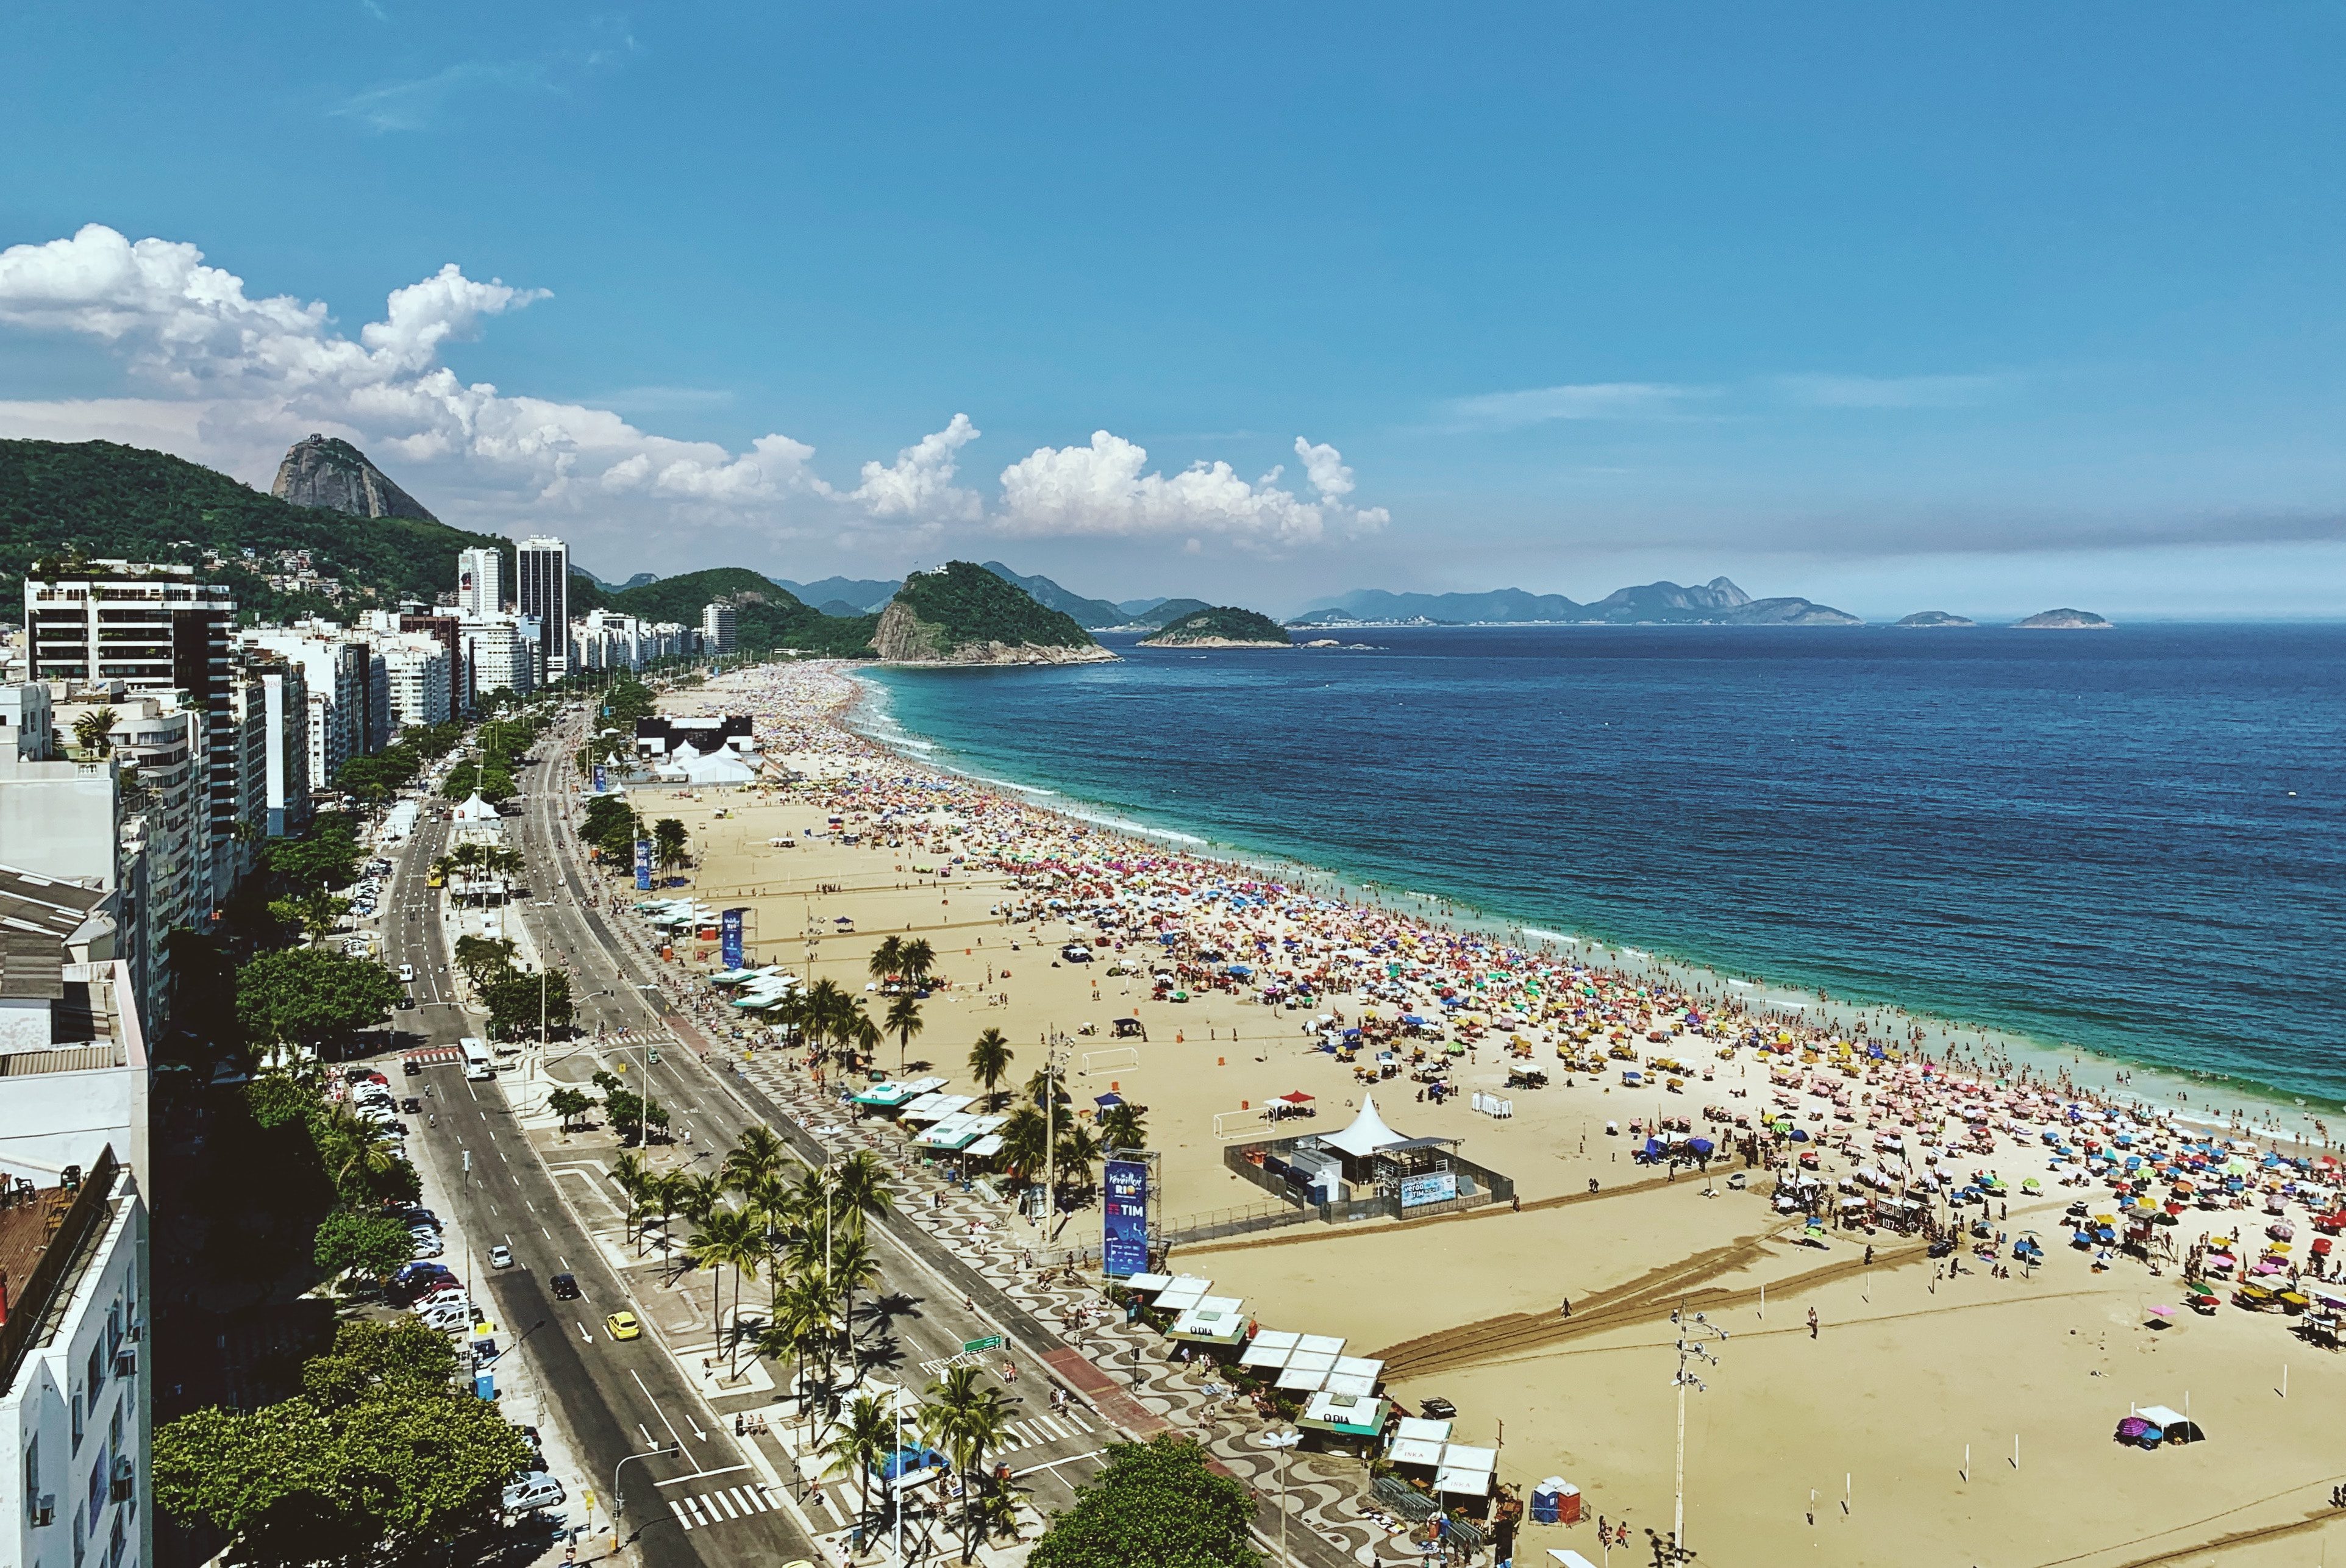 Copacabana beach in Brazil